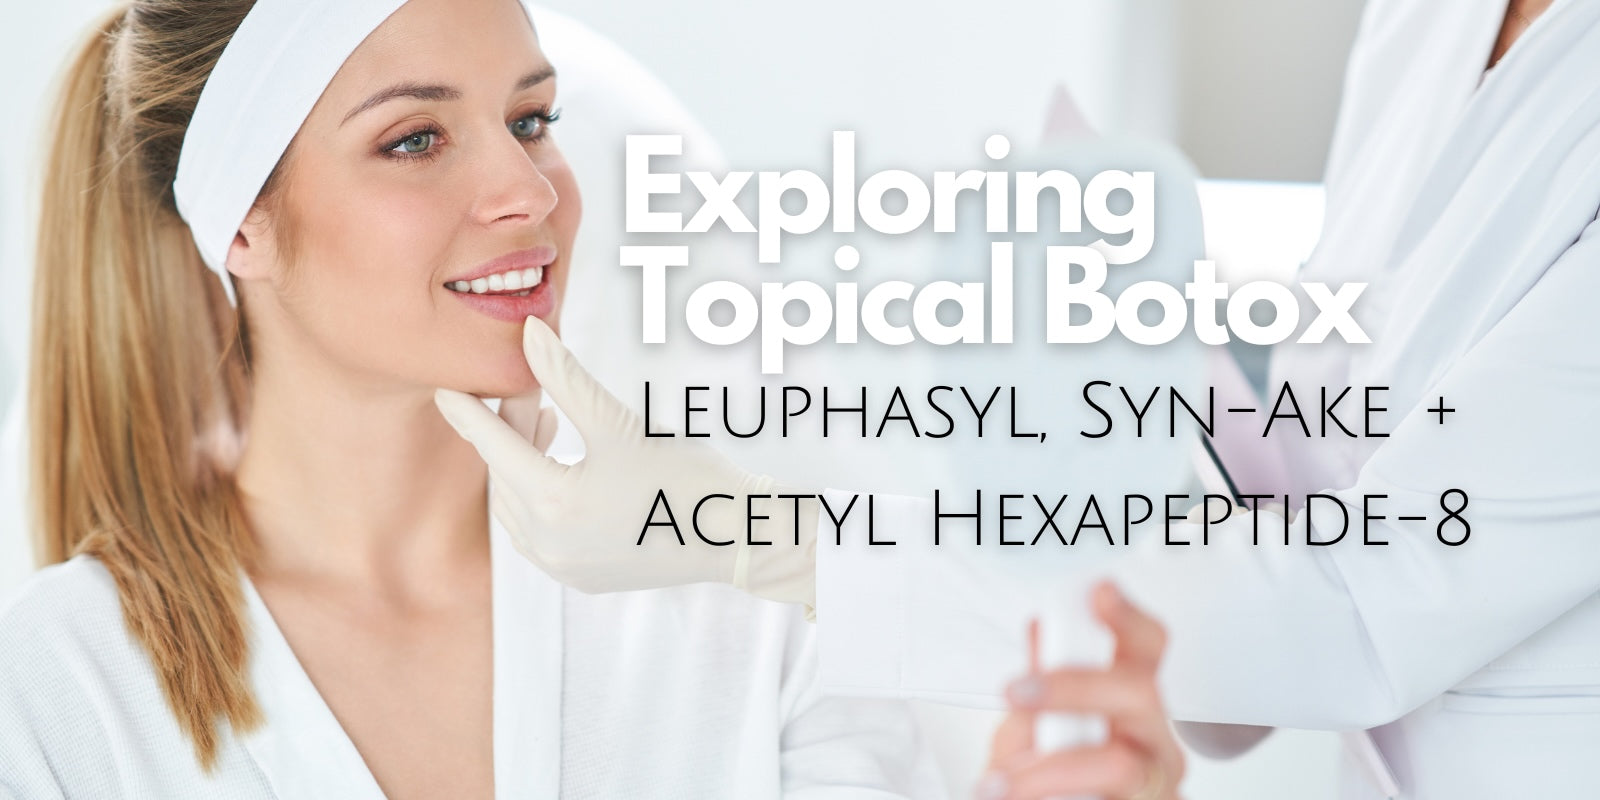 Can I get Topical Botox? Leuphasyl, Argireline, Syn-Ake